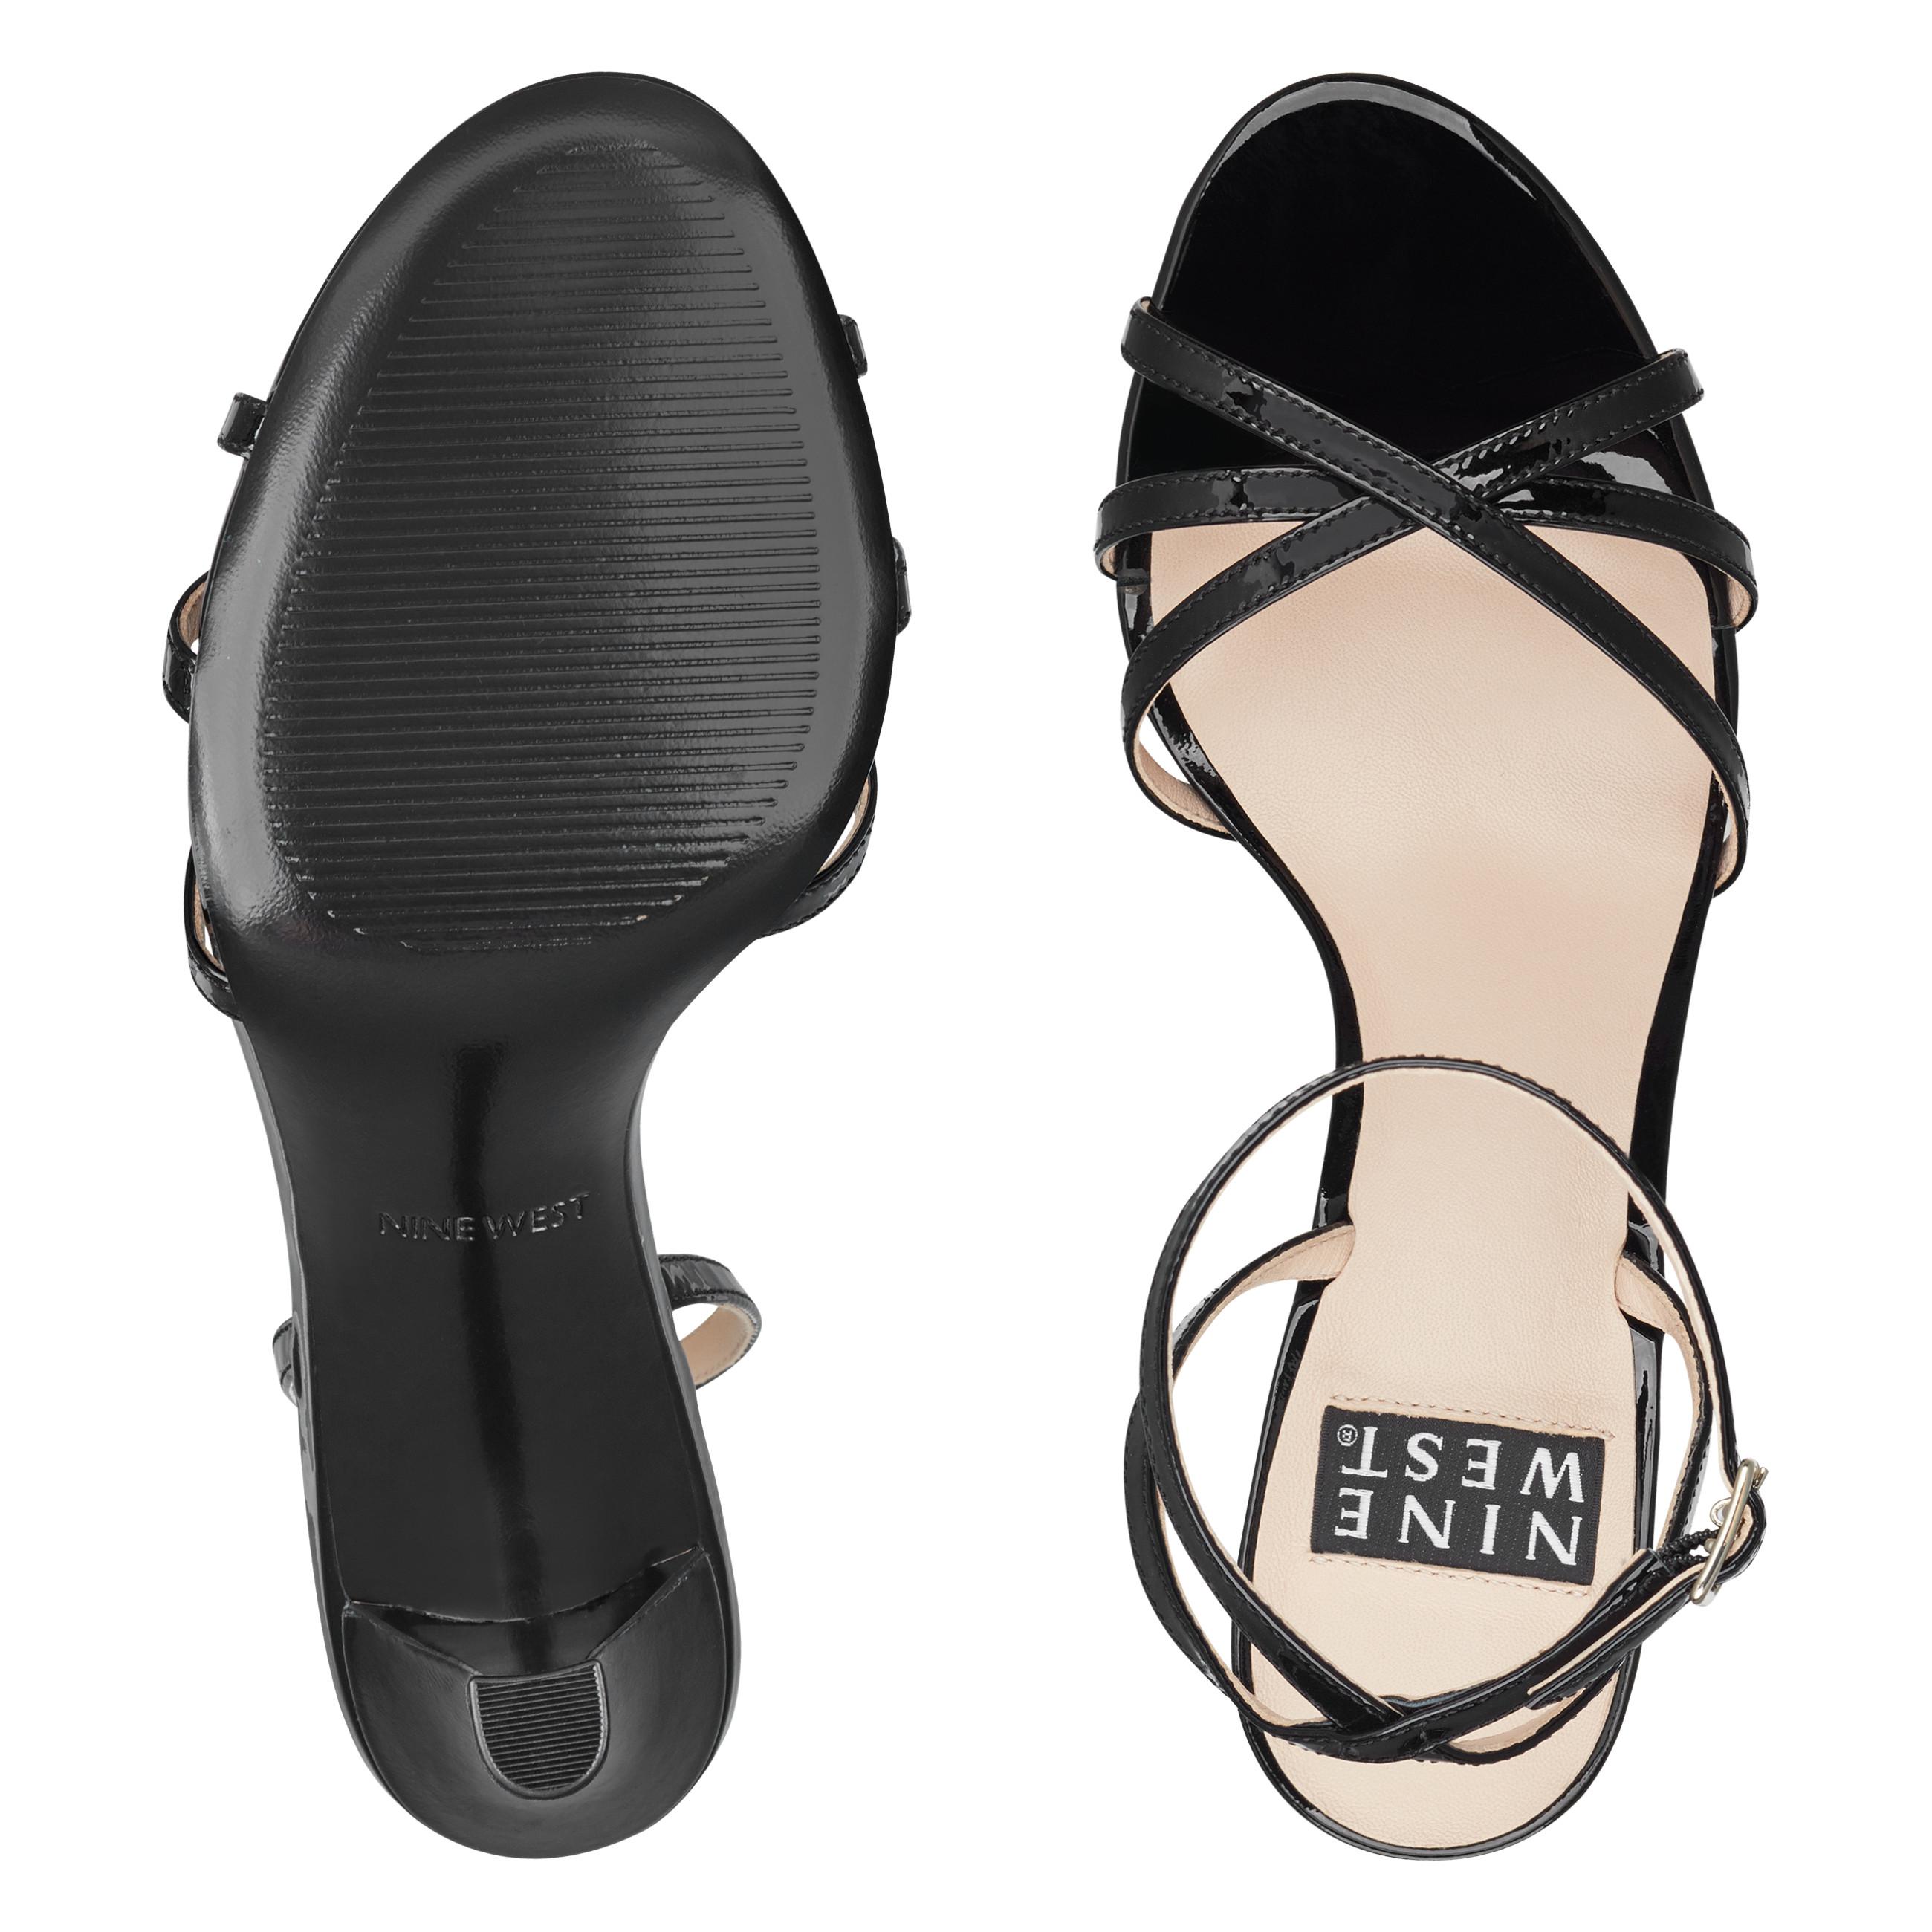 Nine West Frindor Strappy Sandals in Black Patent (Black) - Lyst